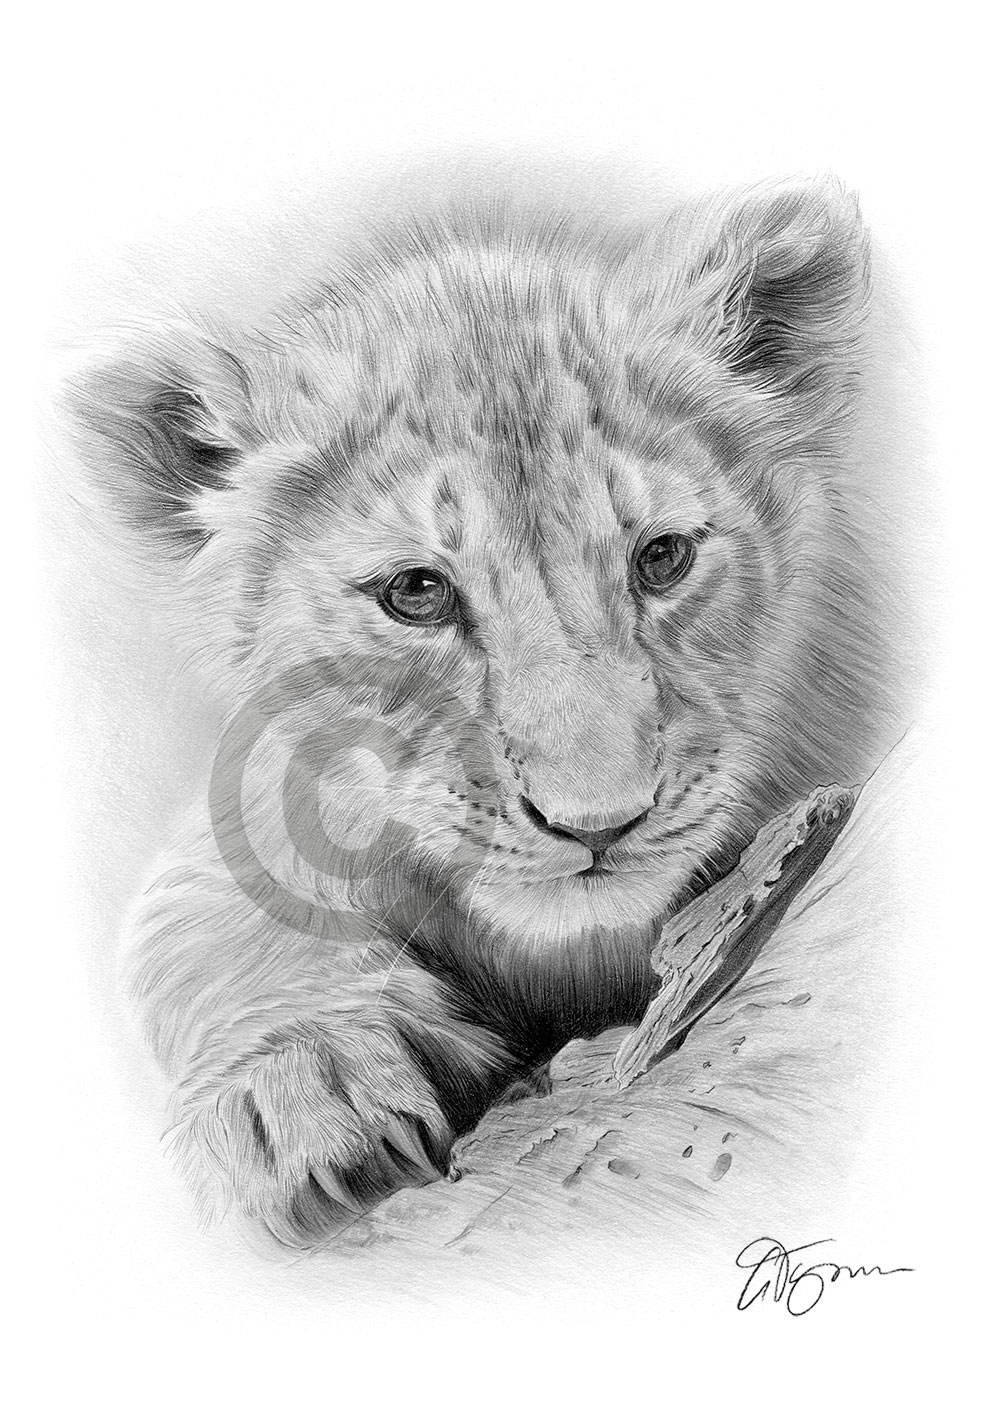 Pencil drawing of a lion cub by artist Gary Tymon